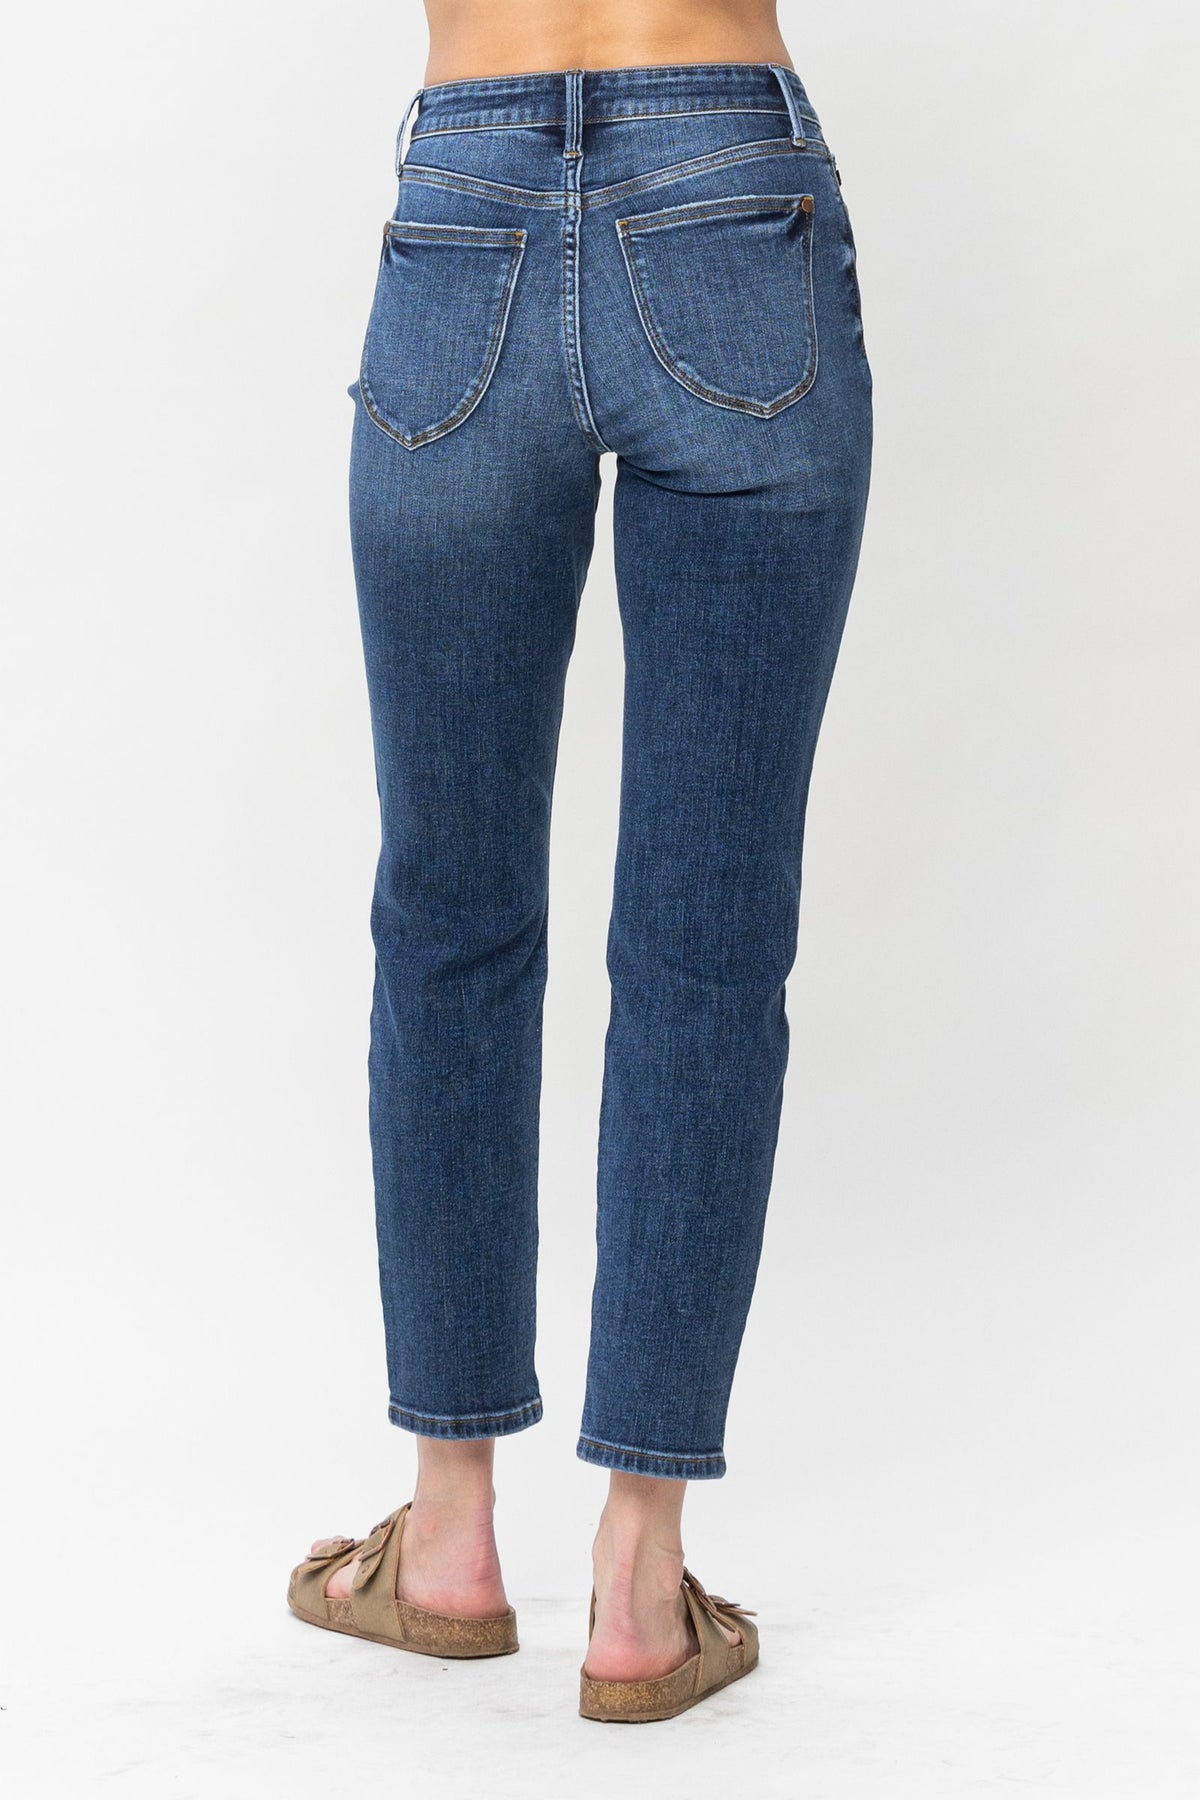 Judy Blue Shield Pocket Jean